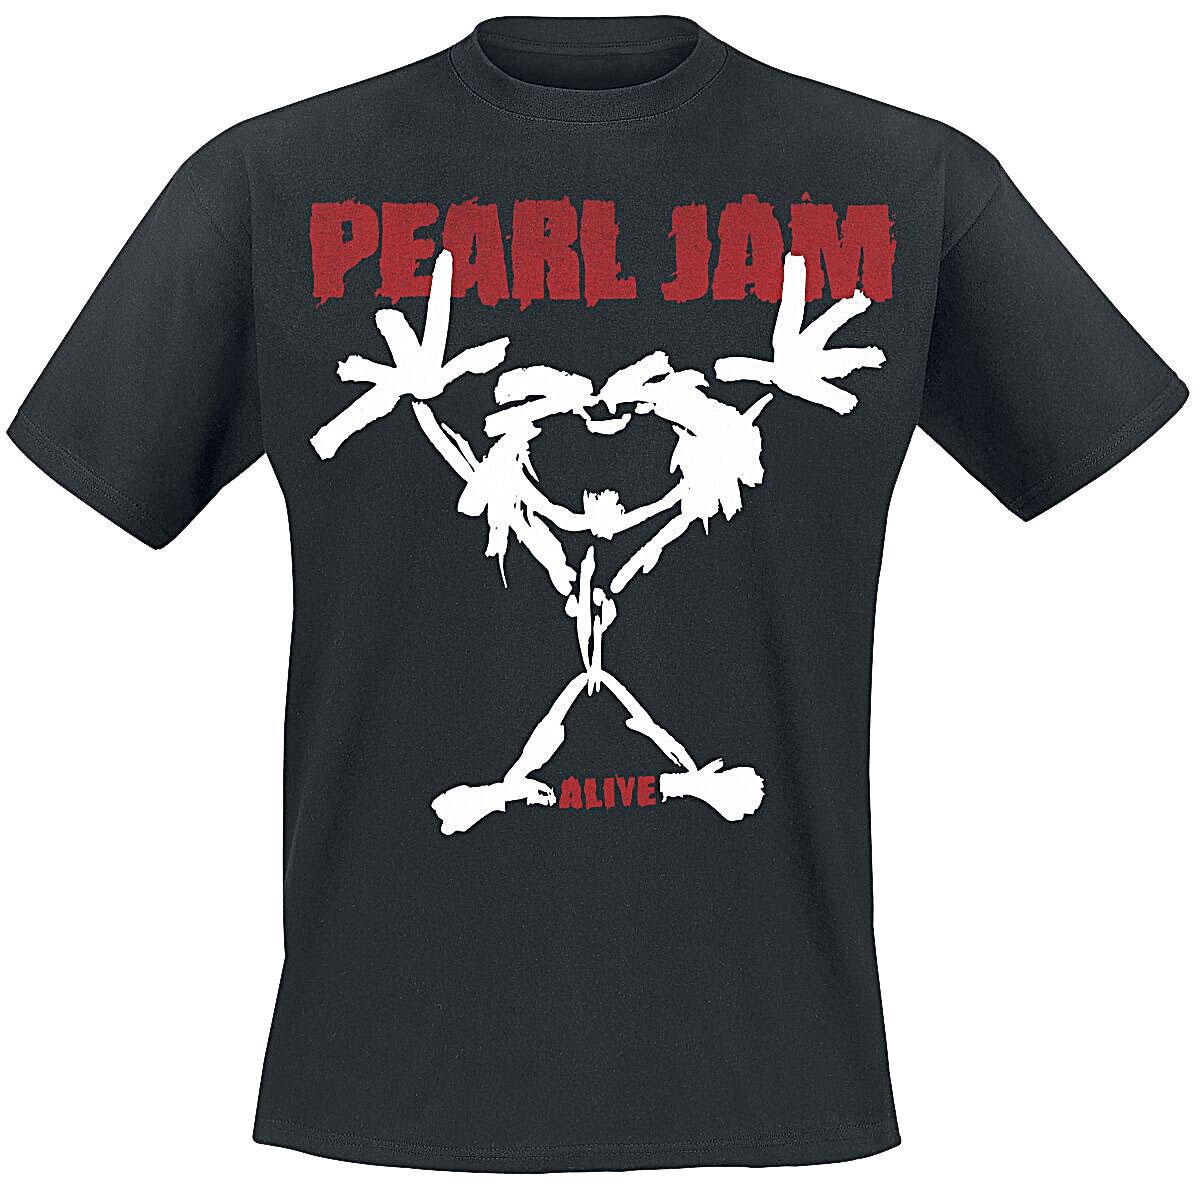 T-shirt Pearl Jam (19,99 euro), via Large.be.